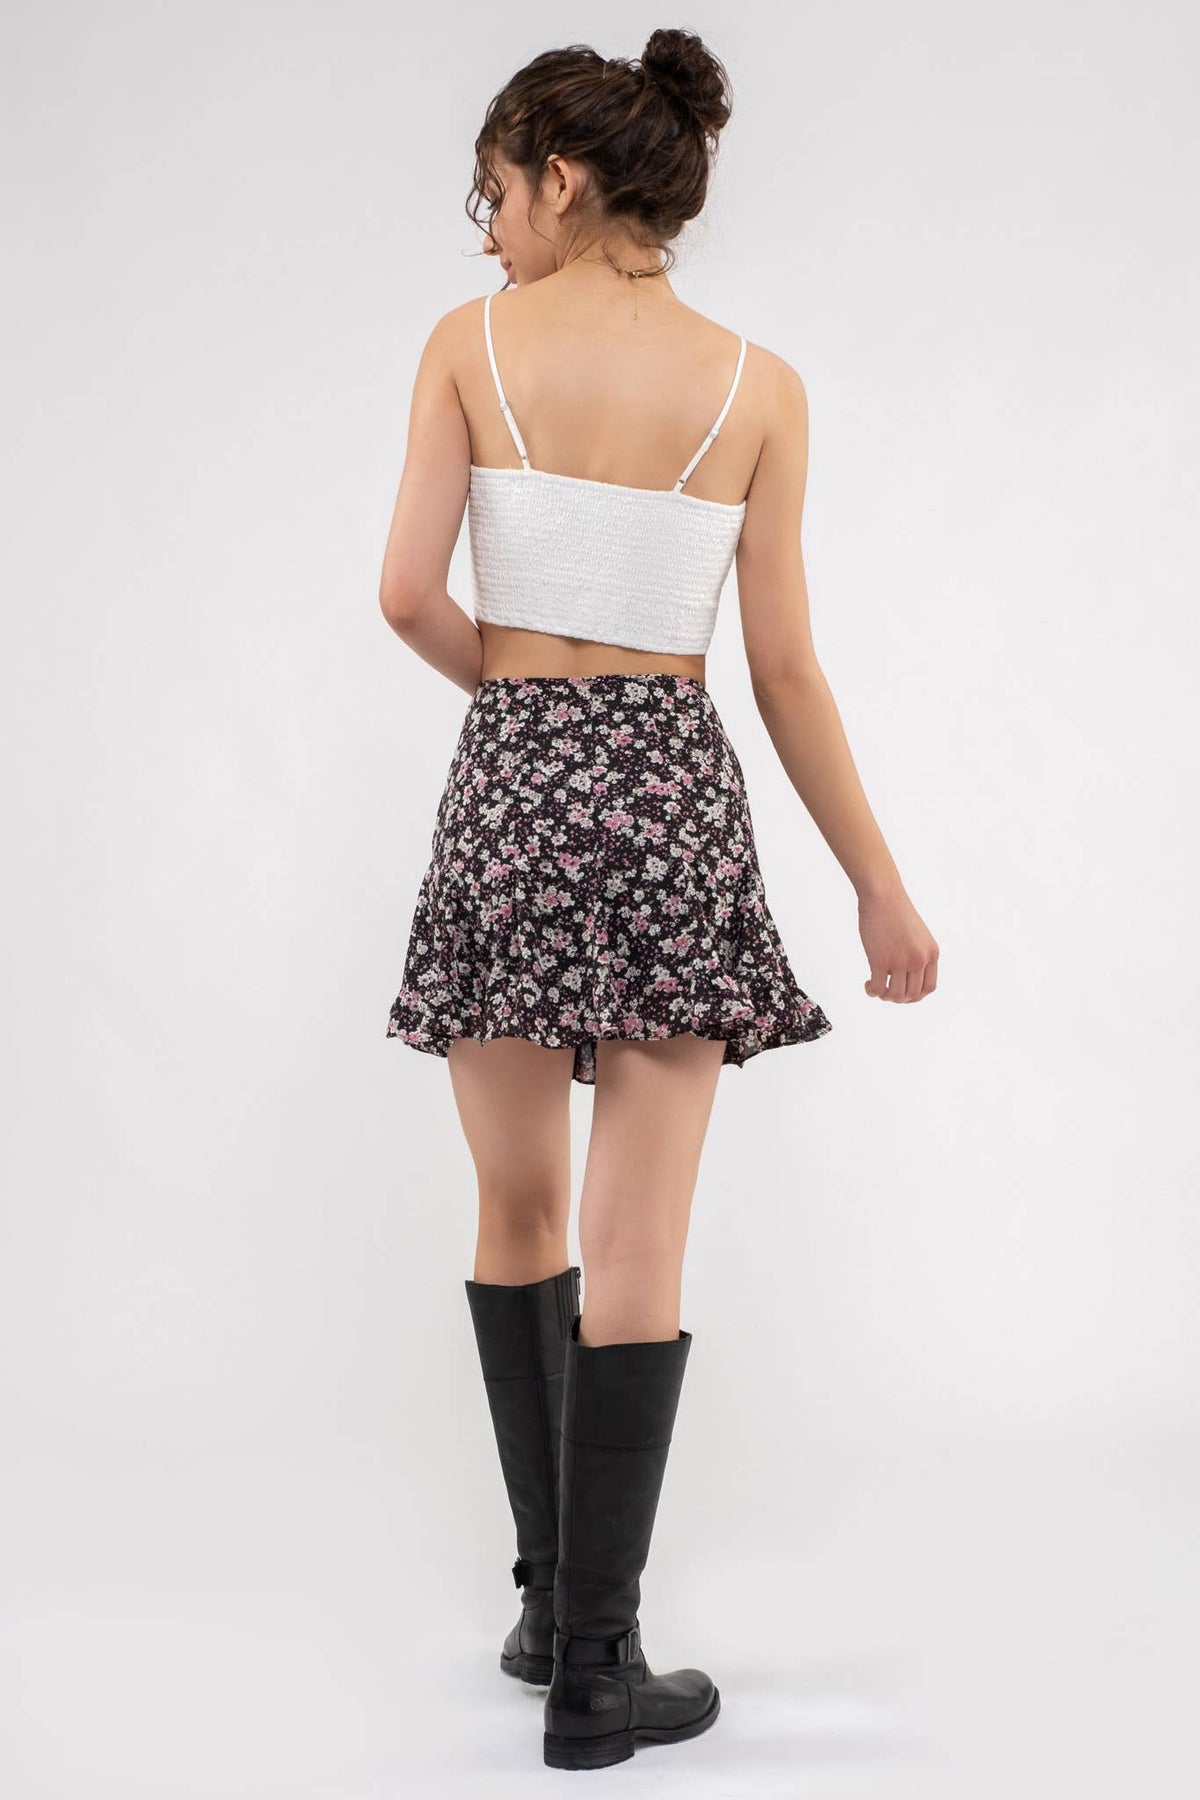 The Farah floral skirt